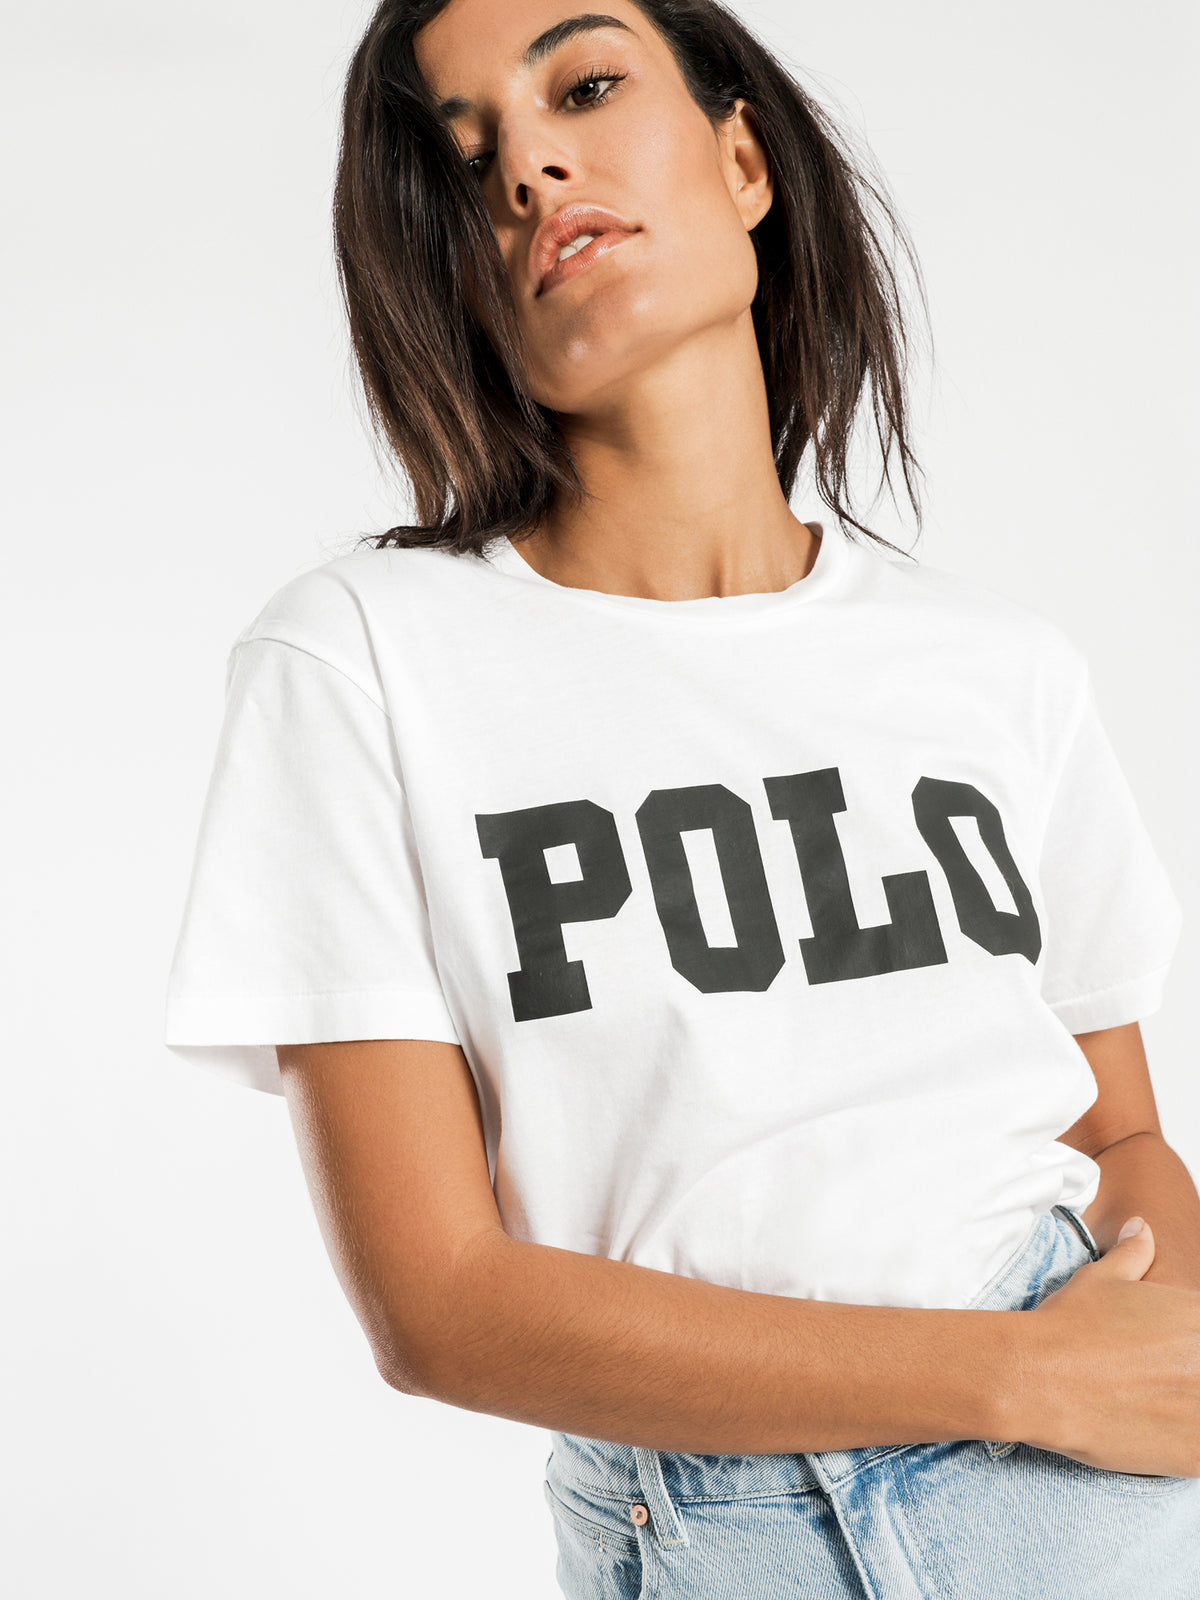 Big Polo Logo T-Shirt in White